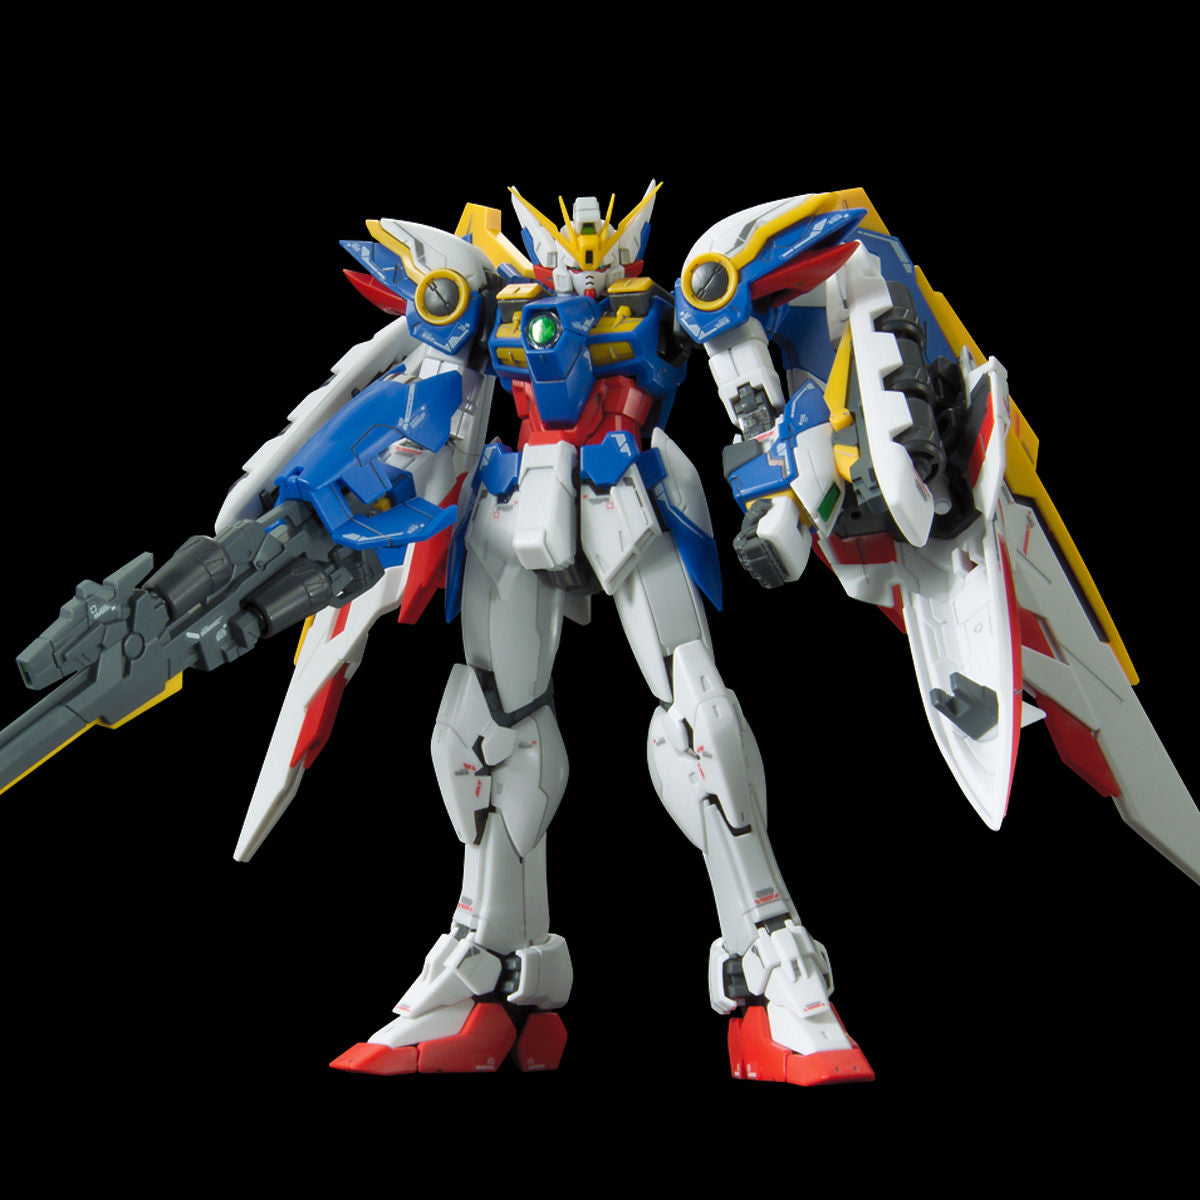 Bandai 1/144 RG 020 Wing Gundam EW Plastic Model Kit